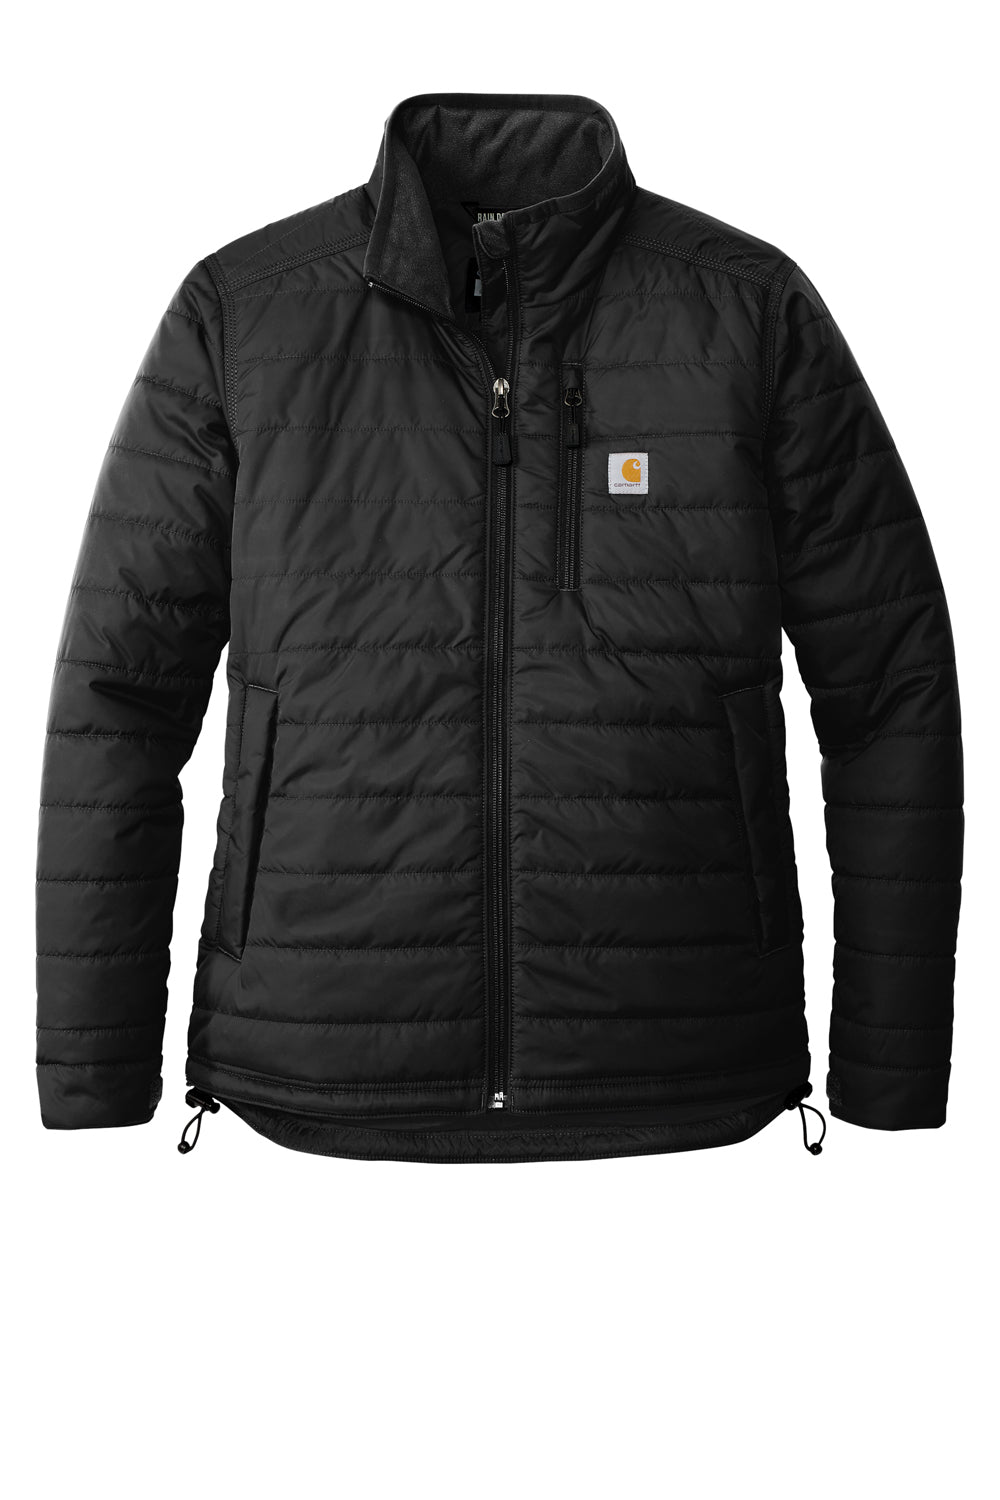 Carhartt CT104314 Womens Gilliam Wind & Water Resistant Full Zip Jacket Black Flat Front